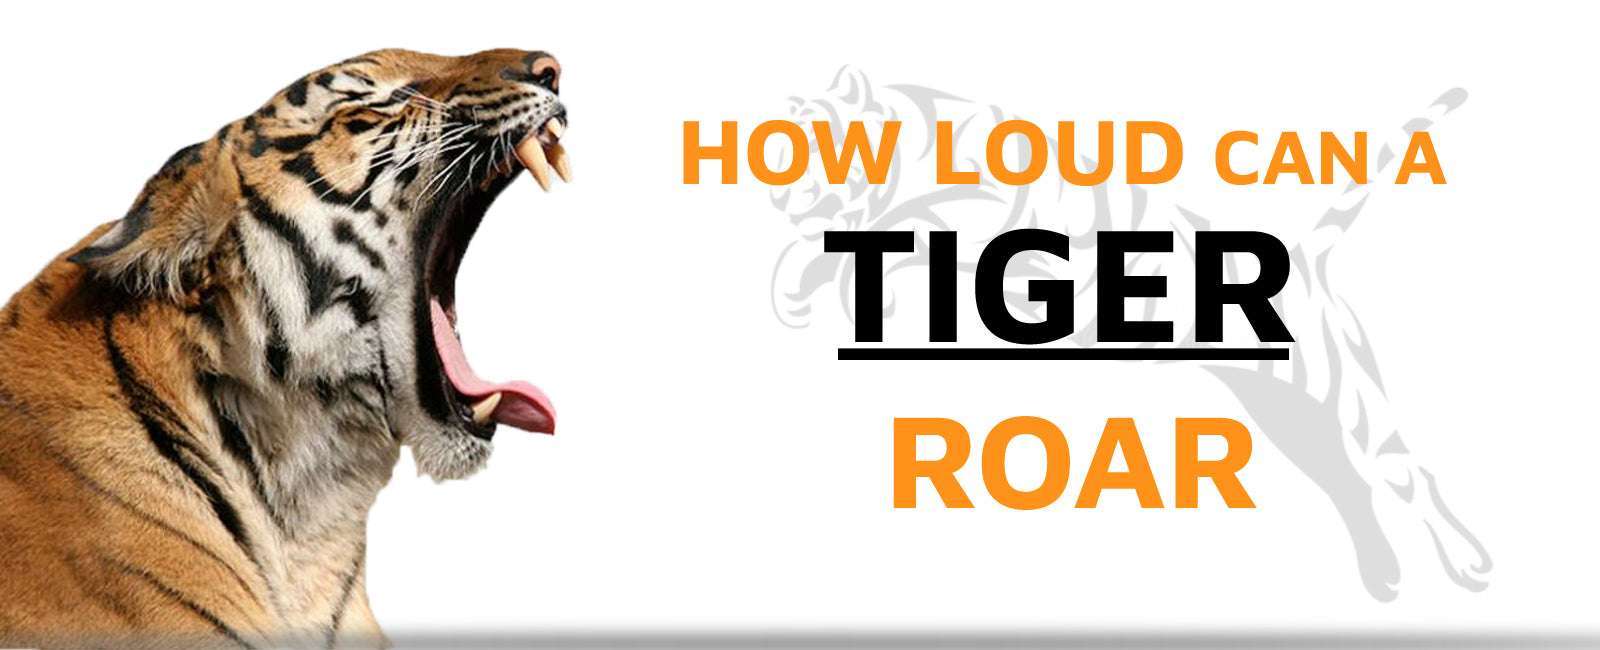 How Loud can a Tiger Roar?